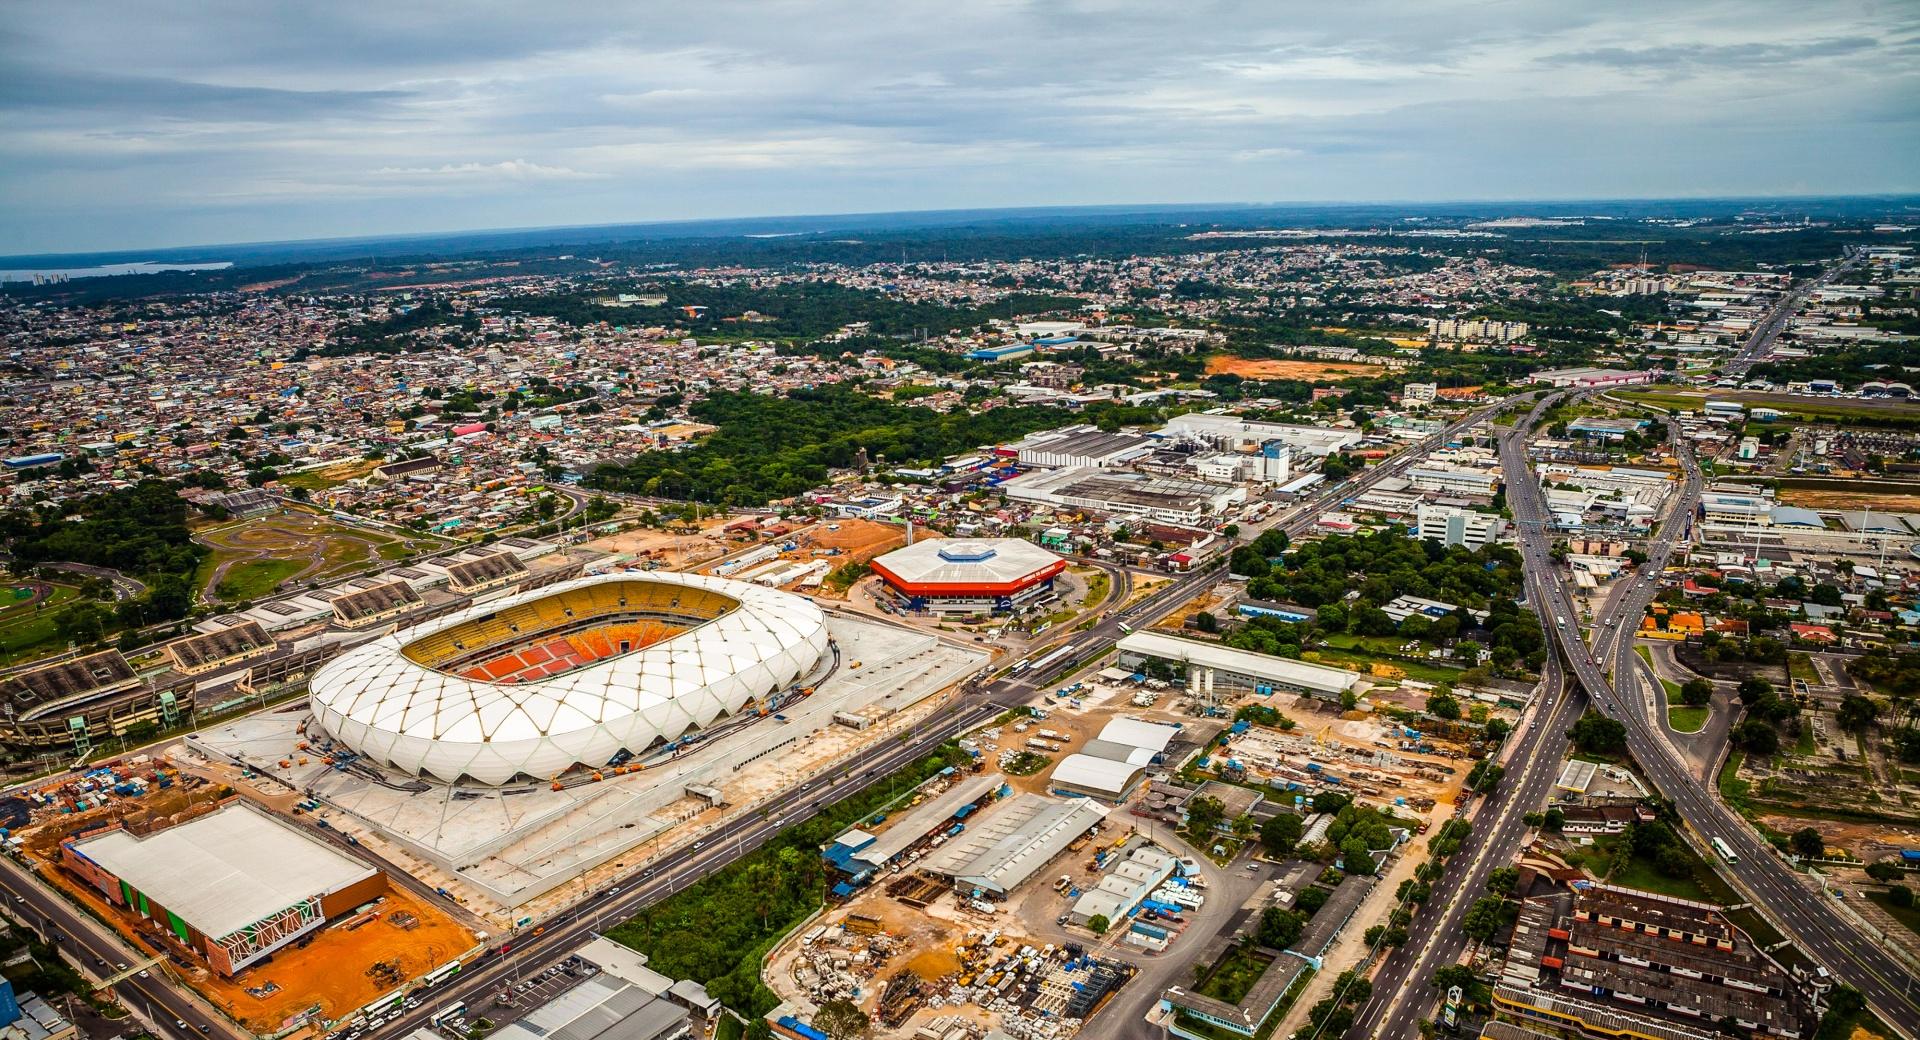 Brazil Stadiums 2014 at 1024 x 1024 iPad size wallpapers HD quality